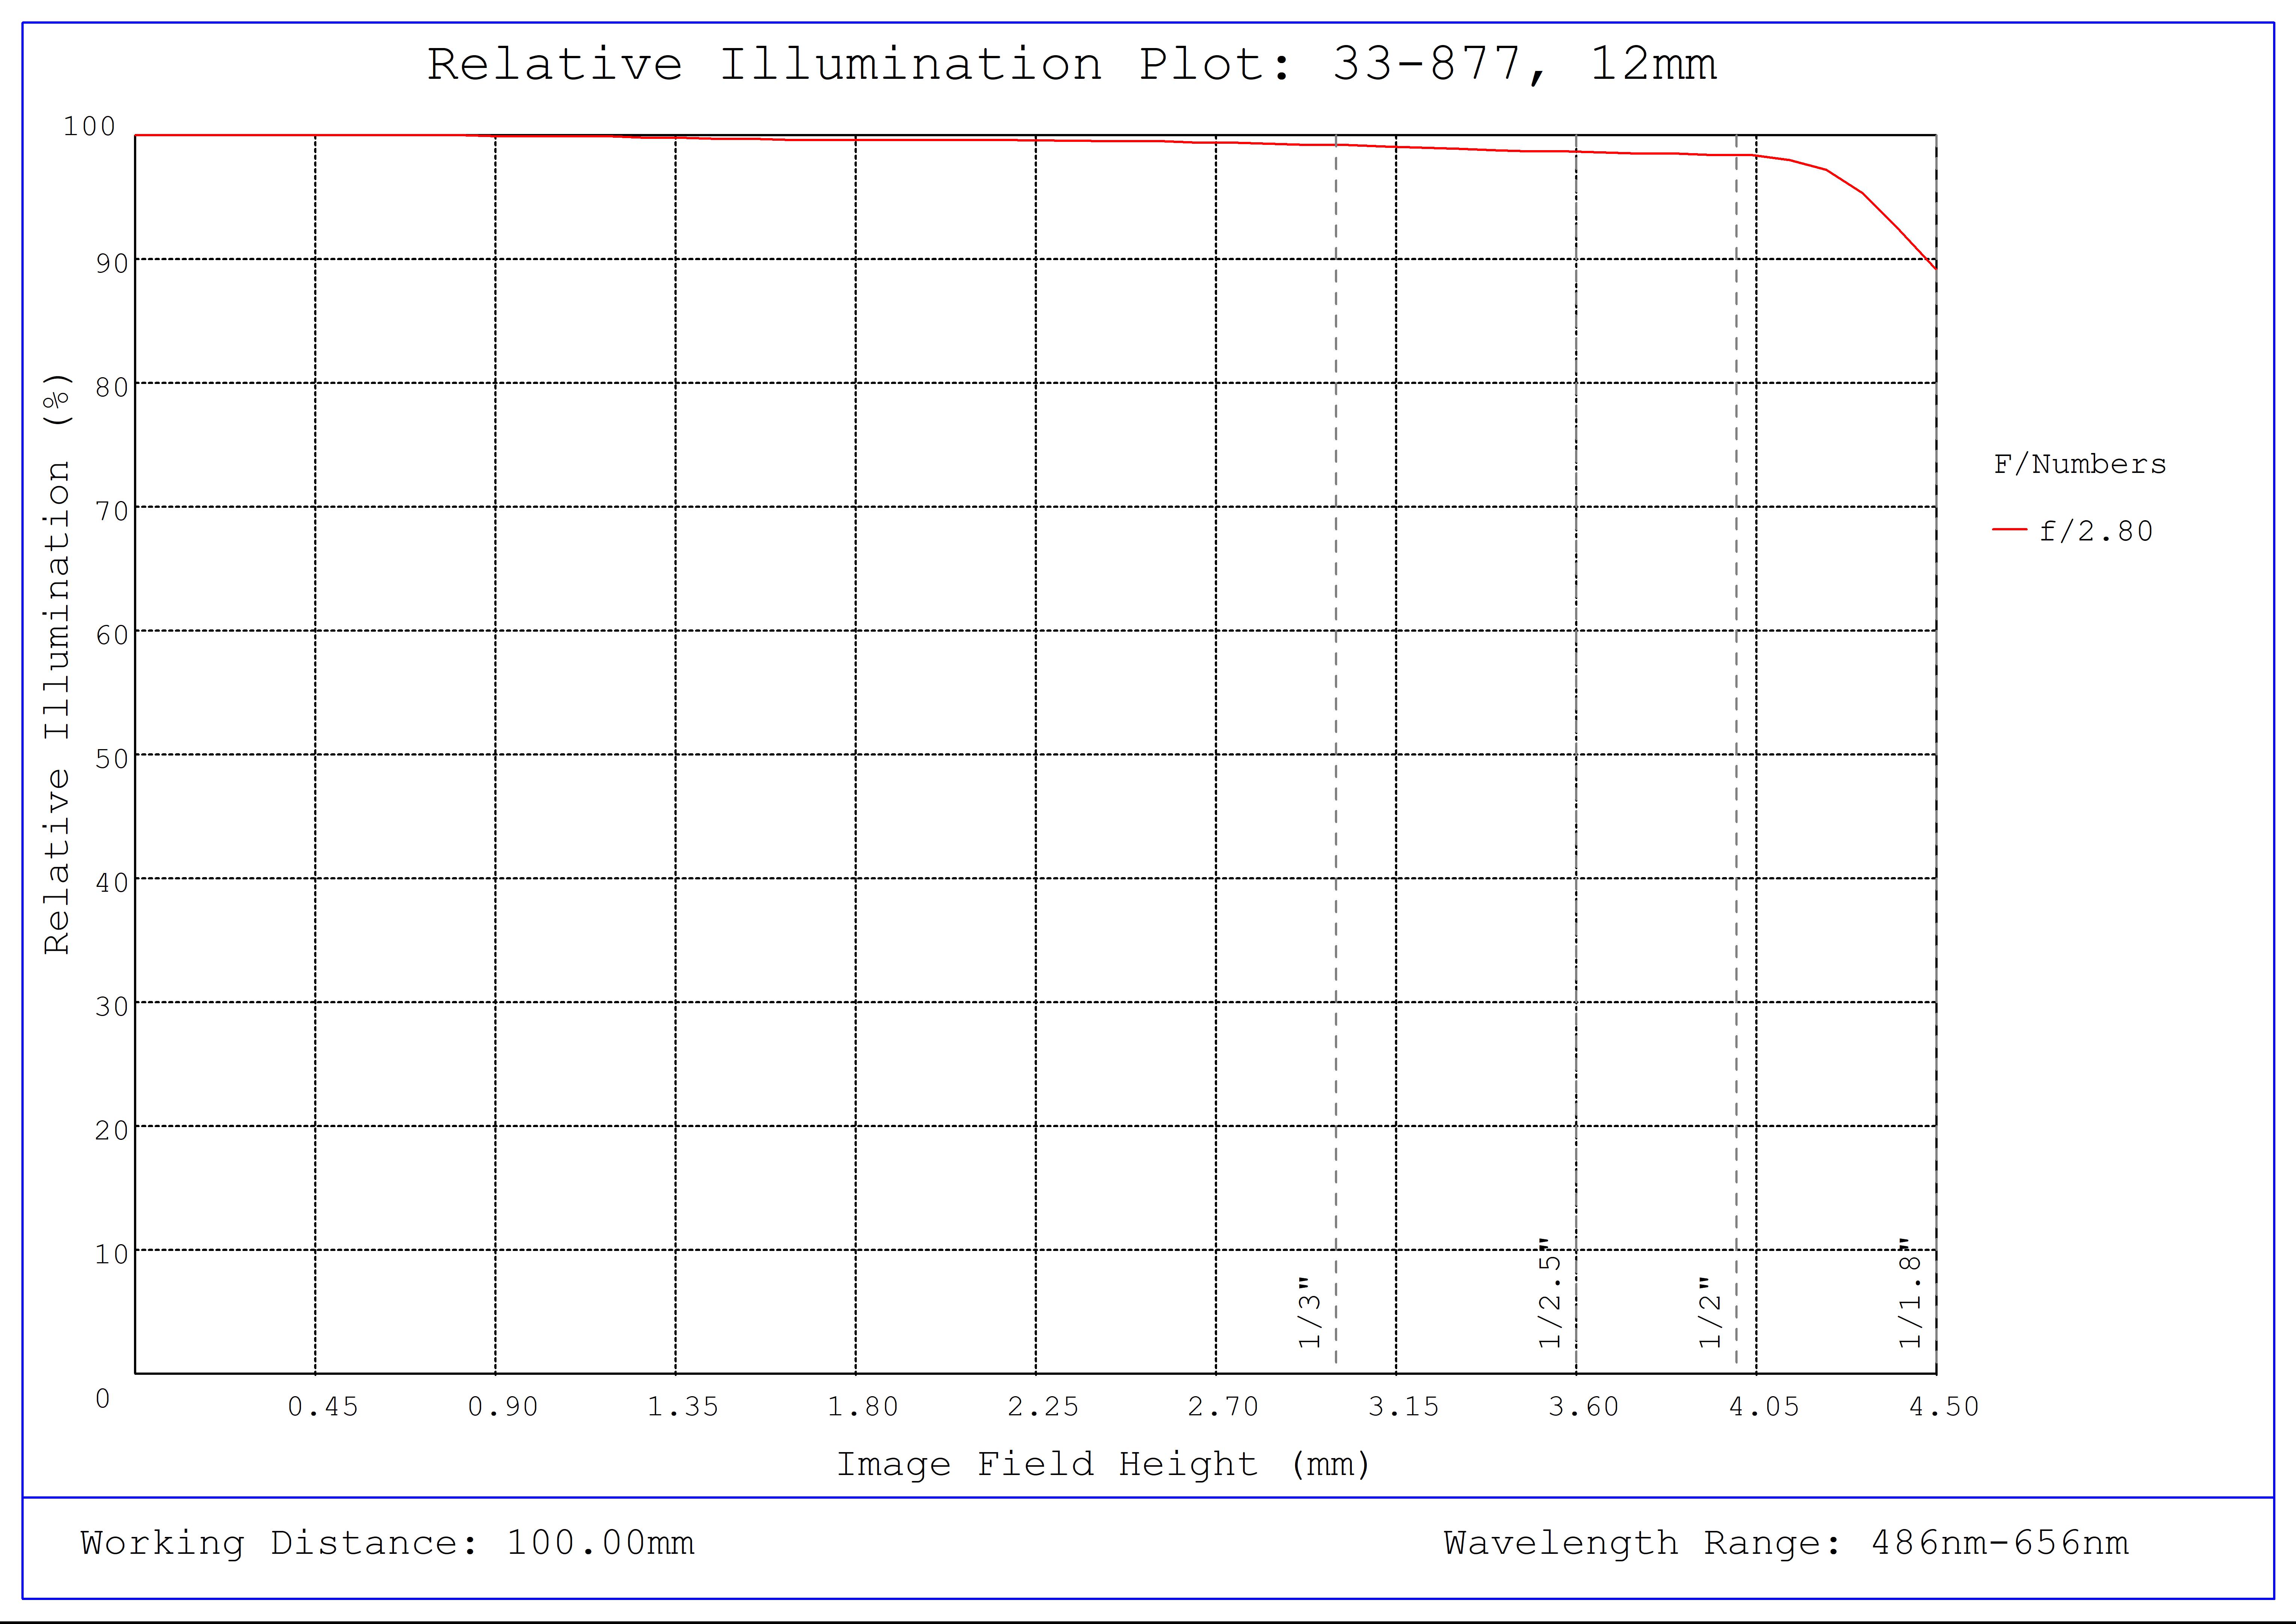 #33-877, 12mm, f/2.8 UCi Series Fixed Focal Length Lens, Relative Illumination Plot